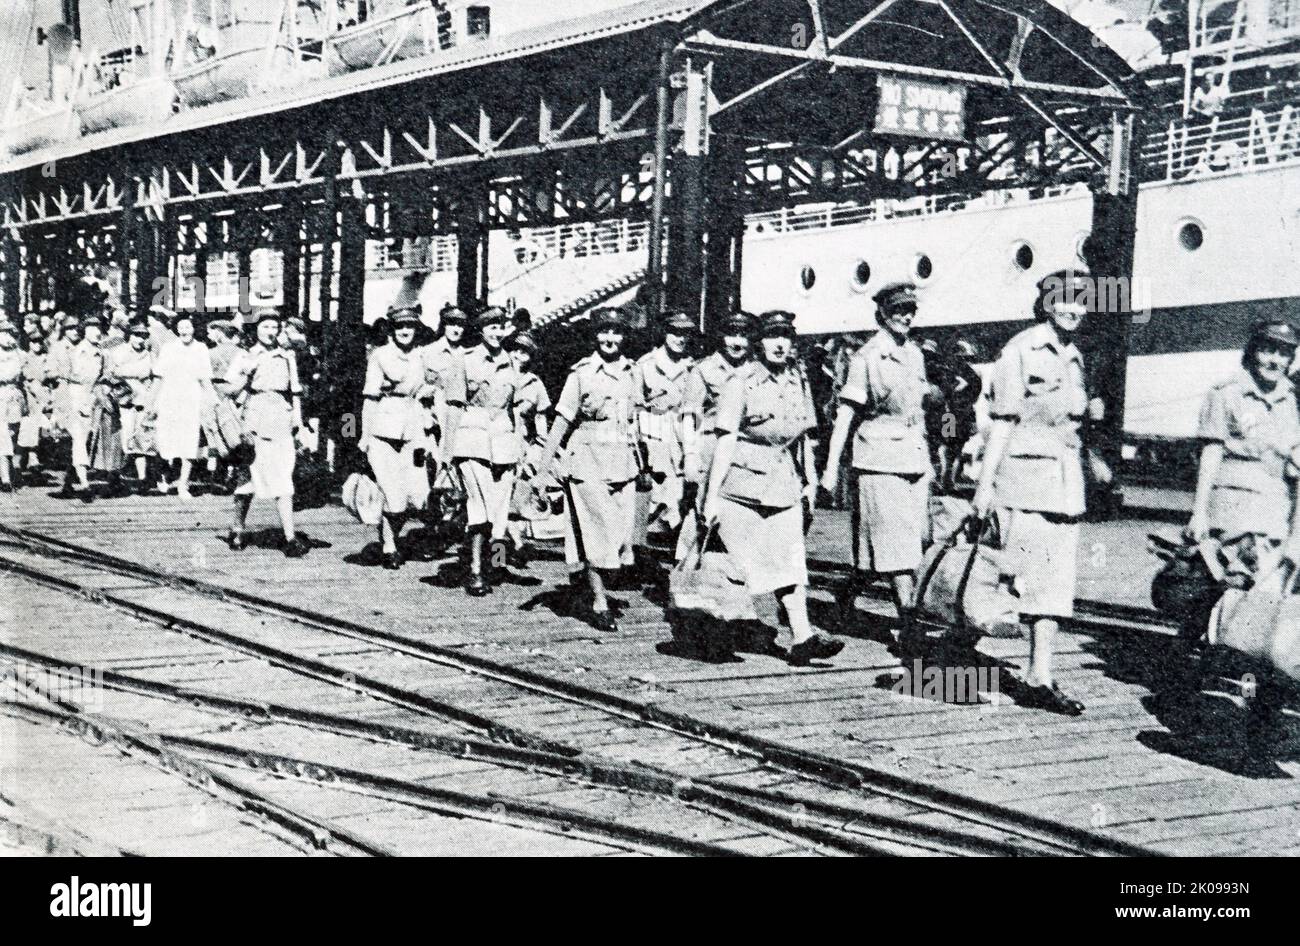 British medical detachments arriving in Hong Kong, nurses in tropical uniform disembarking at the dock. Stock Photo